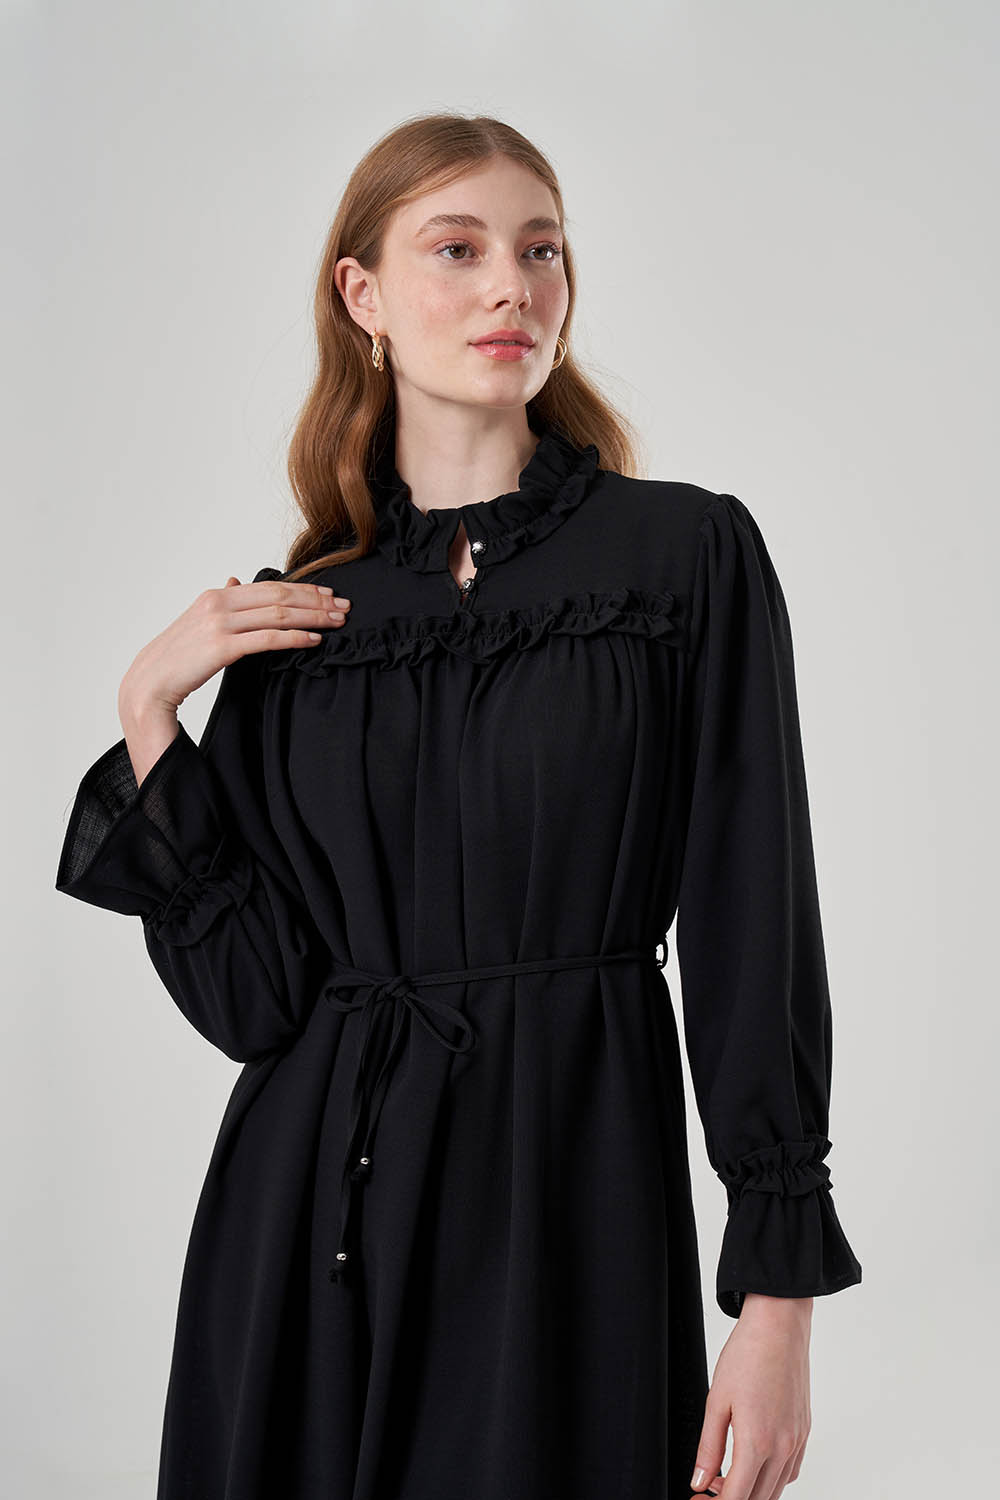 Ruffle Detailed Black Long Dress